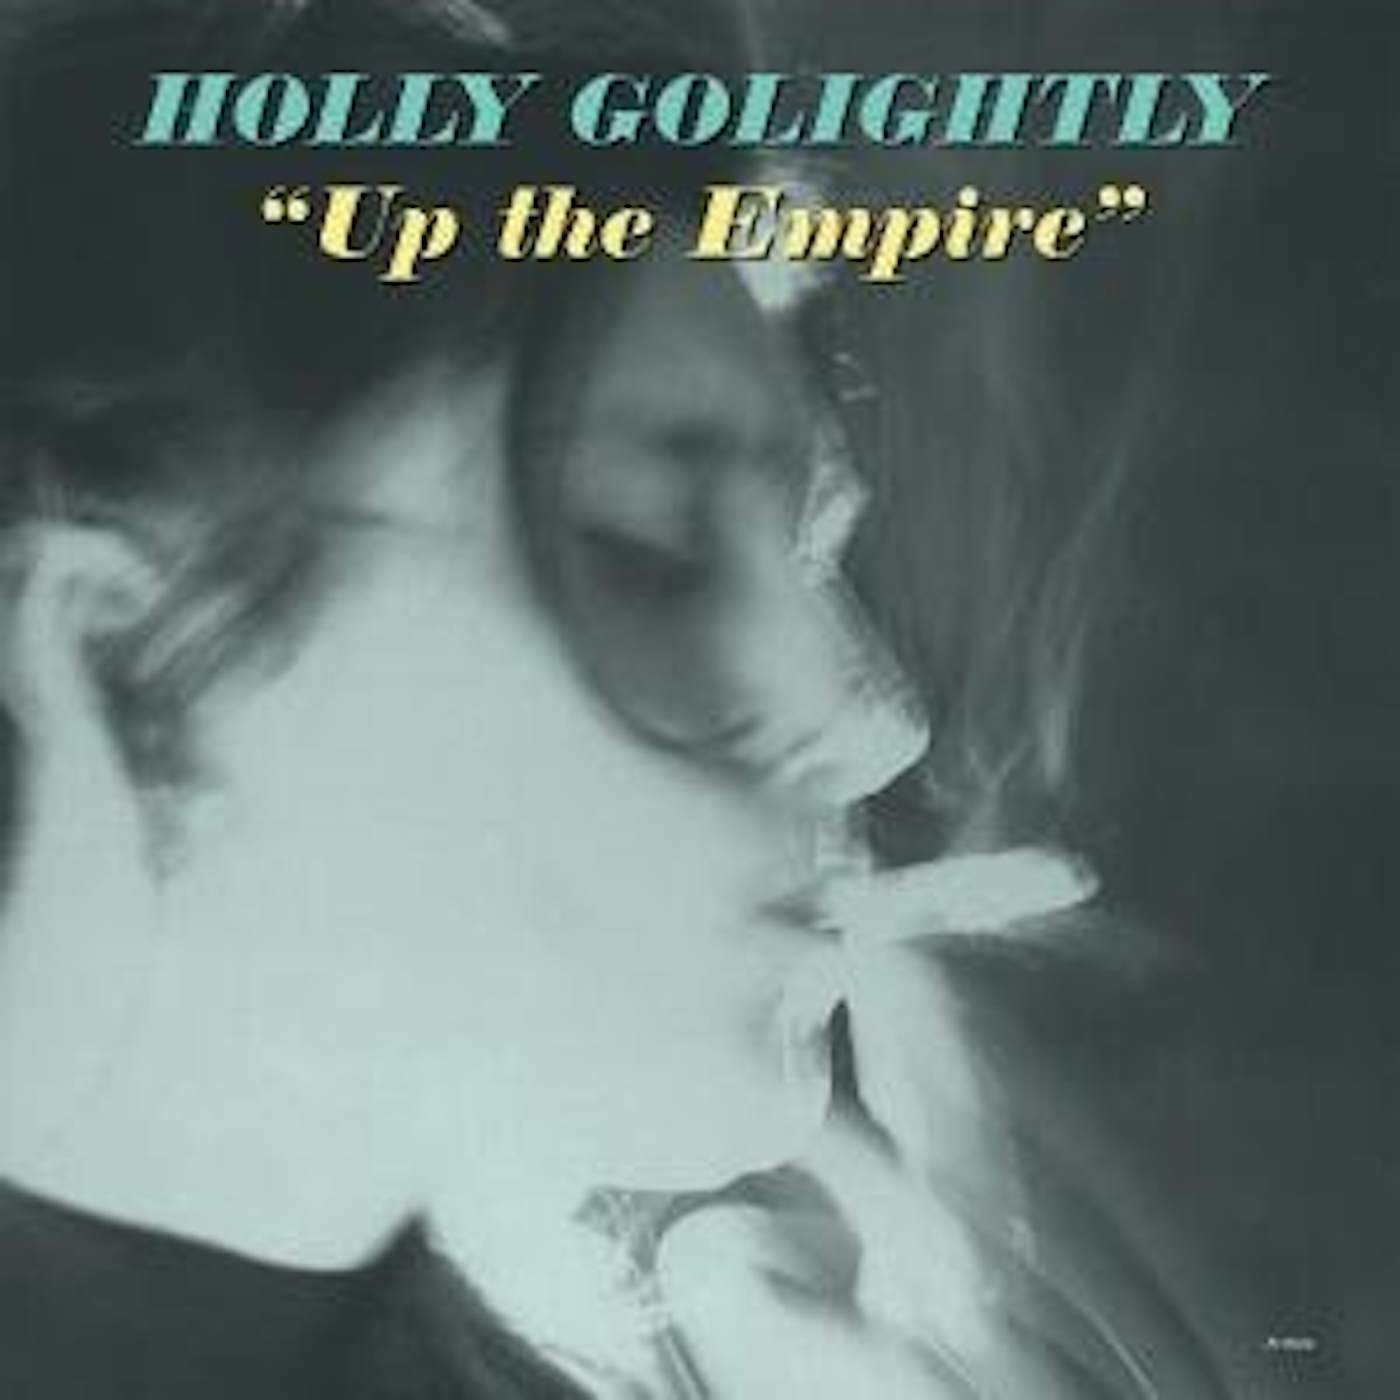 Holly Golightly Up the Empire Vinyl Record